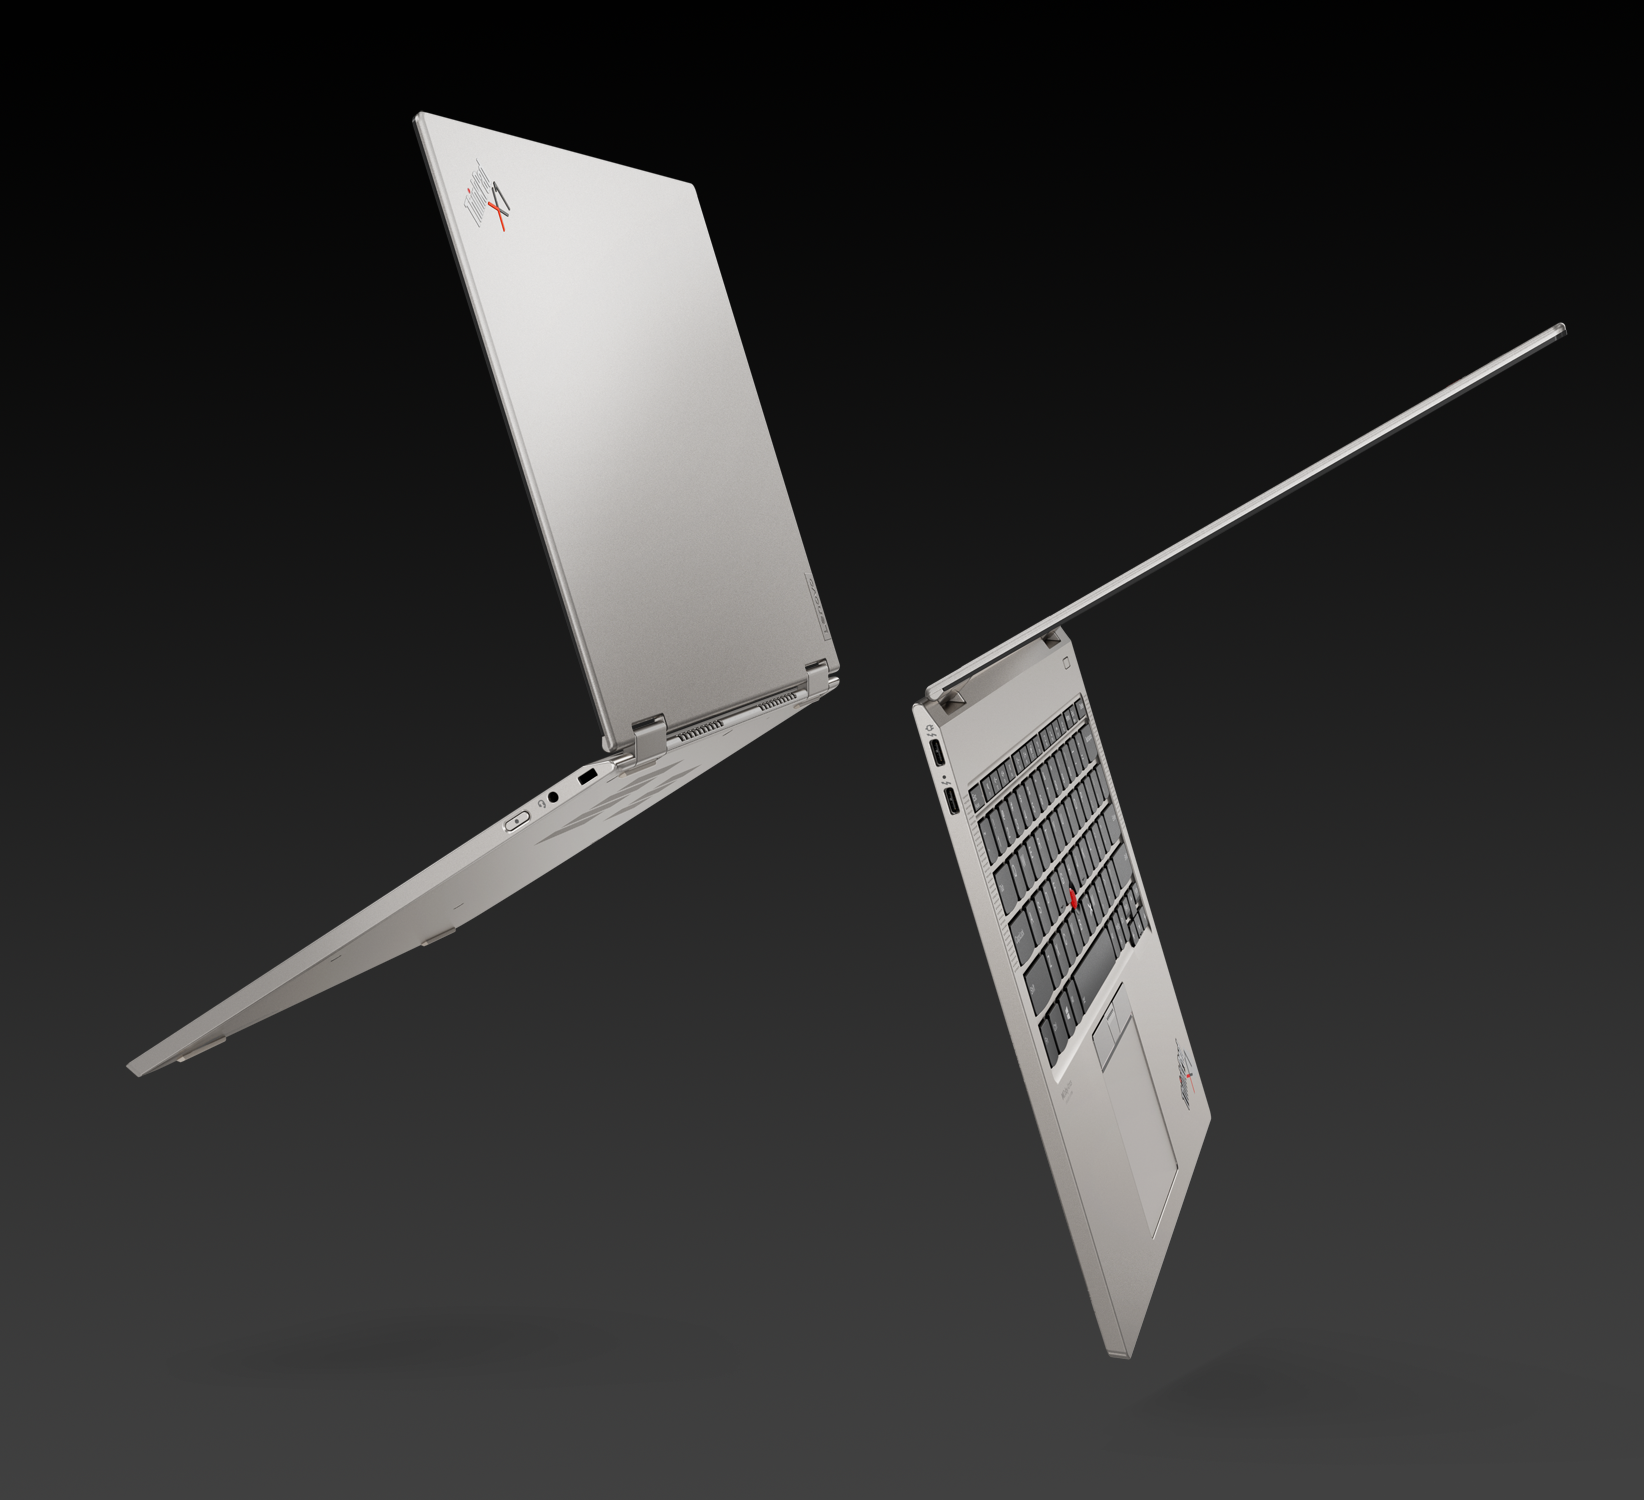 Lenovo ThinkPad X1 Titanium Yoga is the first 3: 2 Convertible Yoga and the thinnest ThinkPad ever